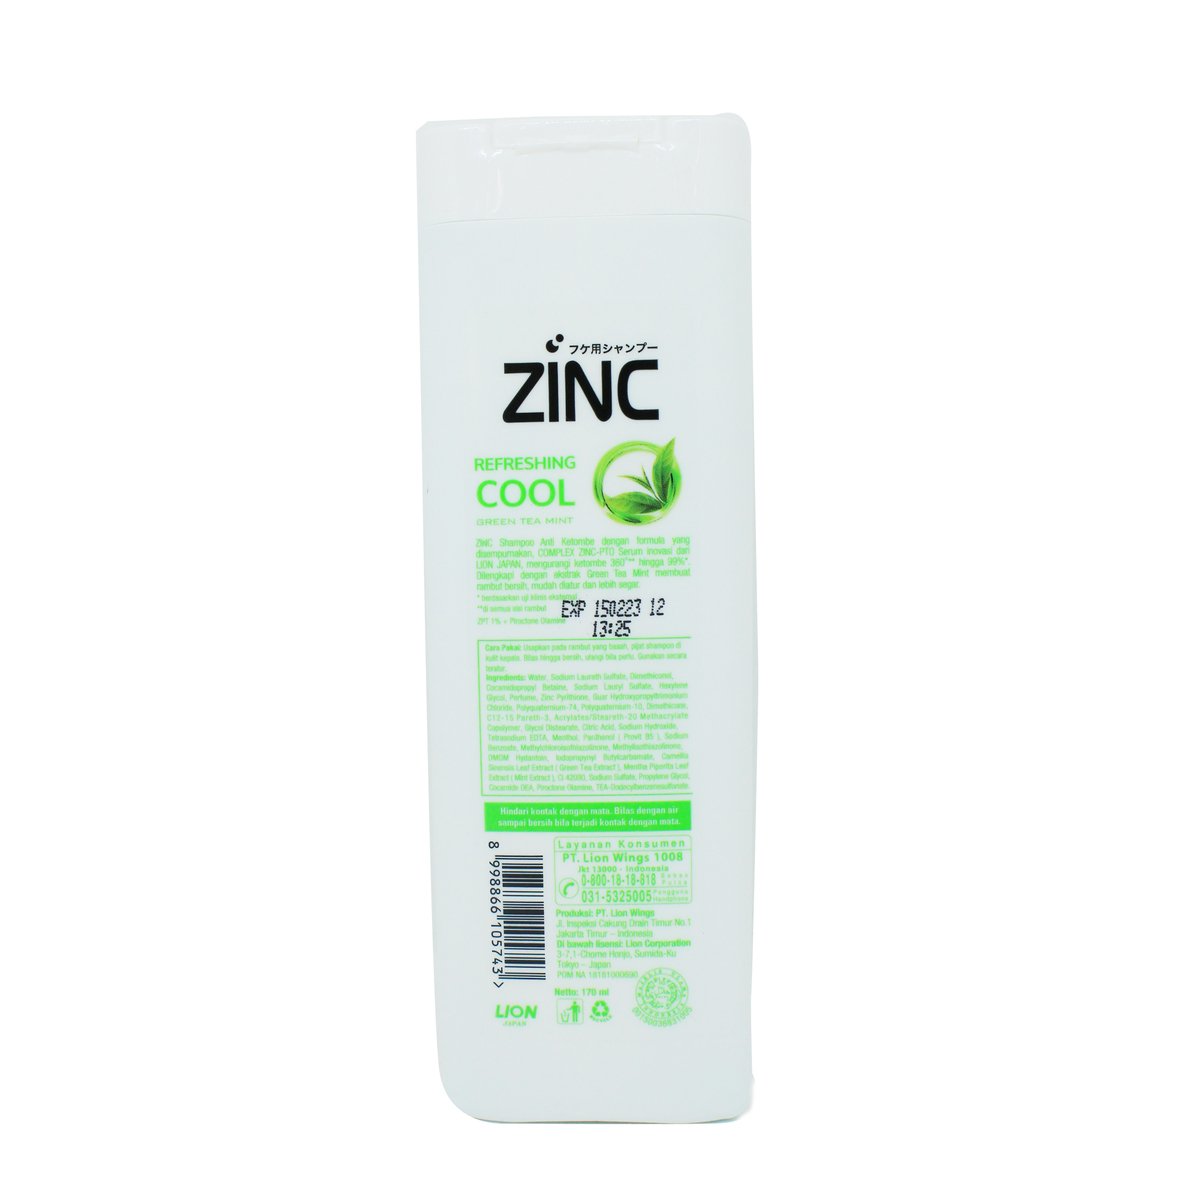 Zinc Shampo Anti Refresing Botol 170ml